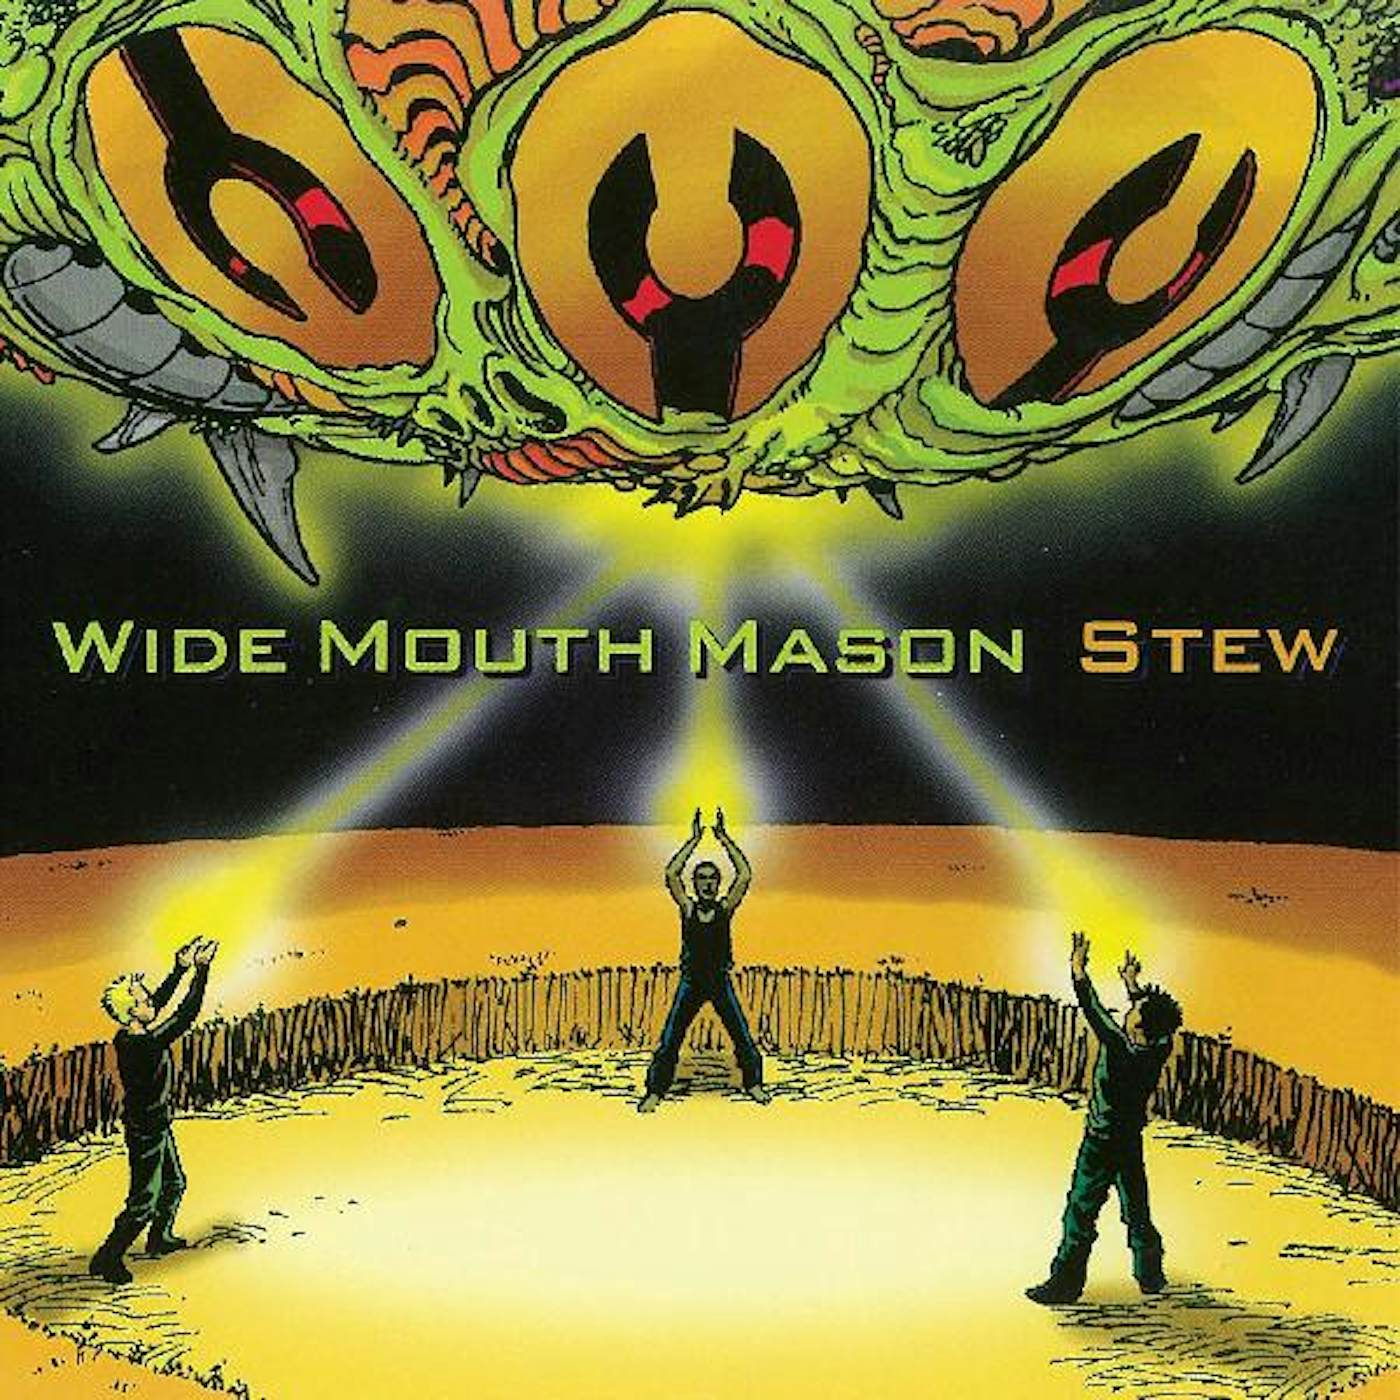 Wide Mouth Mason Stew Vinyl Record